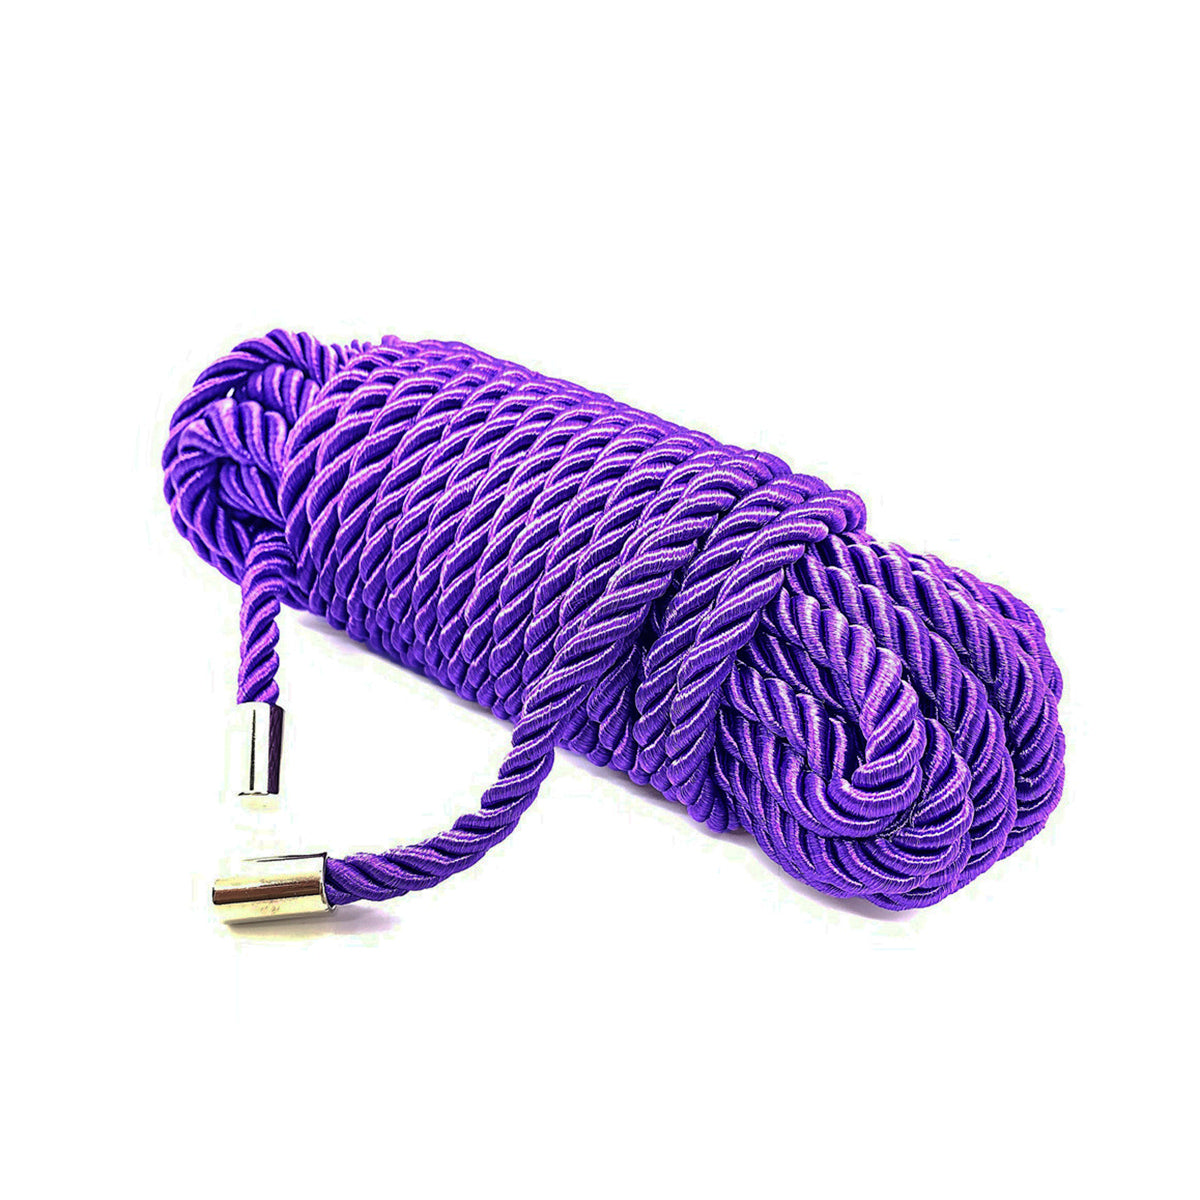 Bright Purple Nylon Shibari Bondage Rope 32Feet